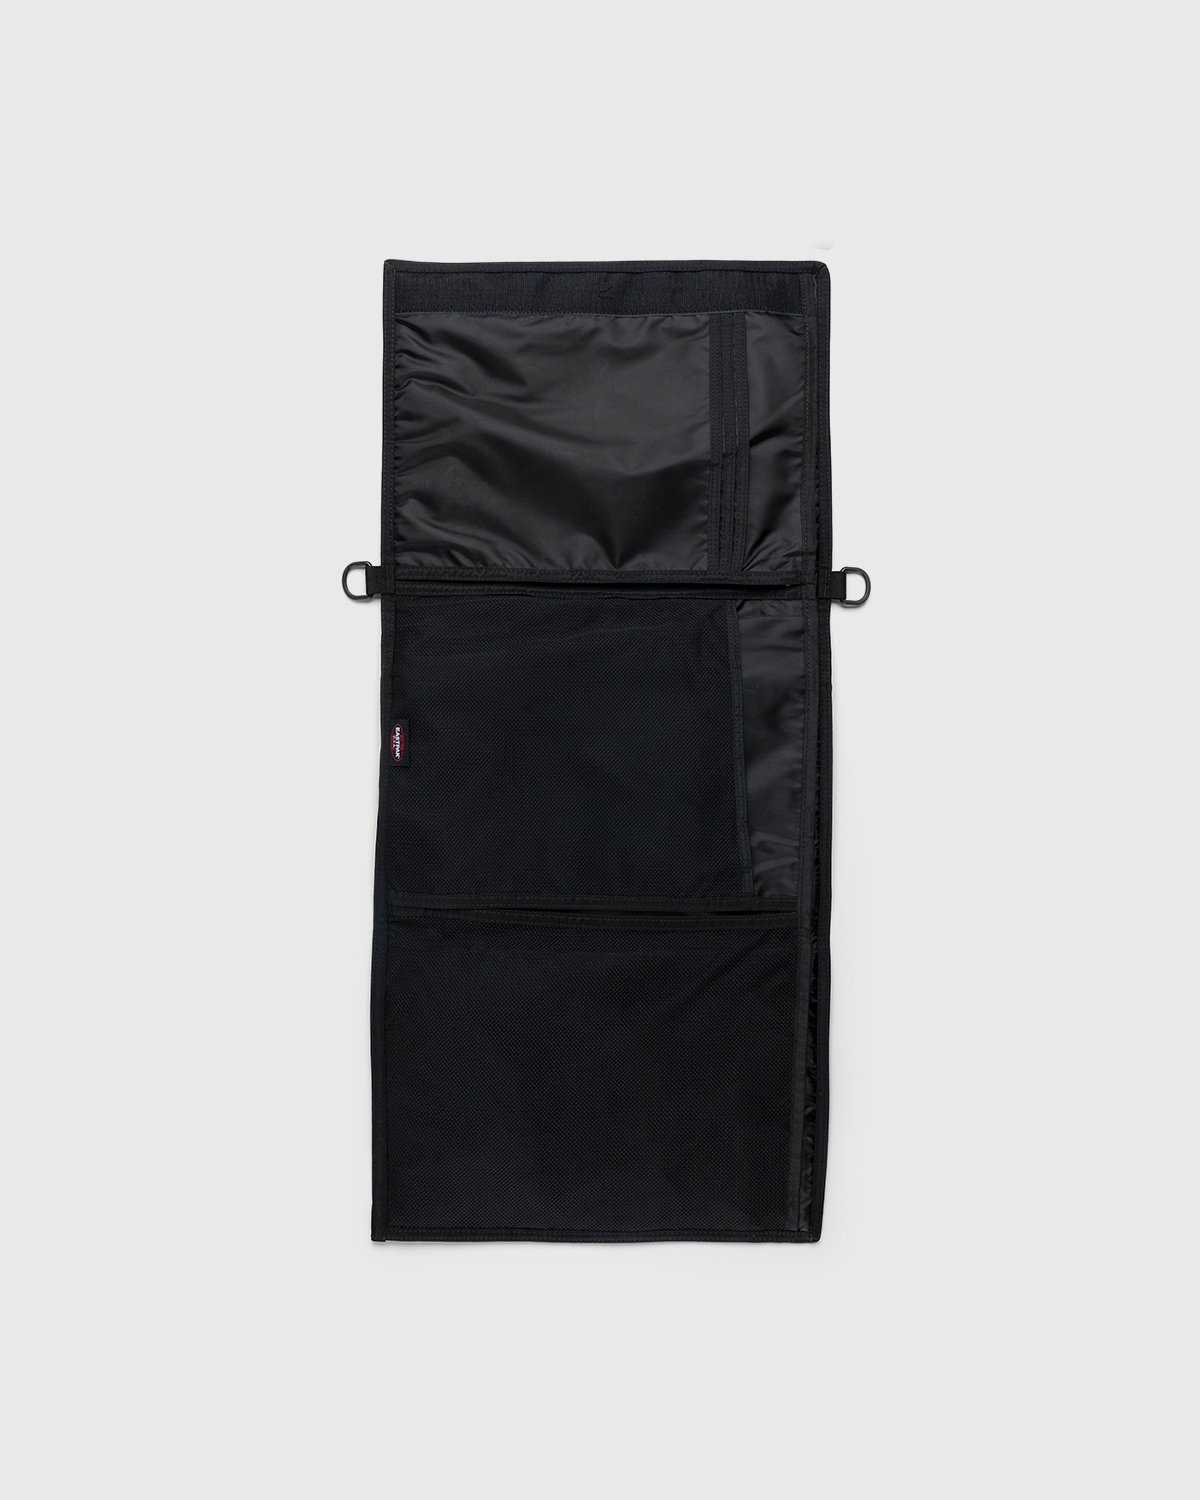 MM6 Maison Margiela x Eastpak - Borsa Tracolla Shoulder Bag Black - Accessories - Black - Image 3